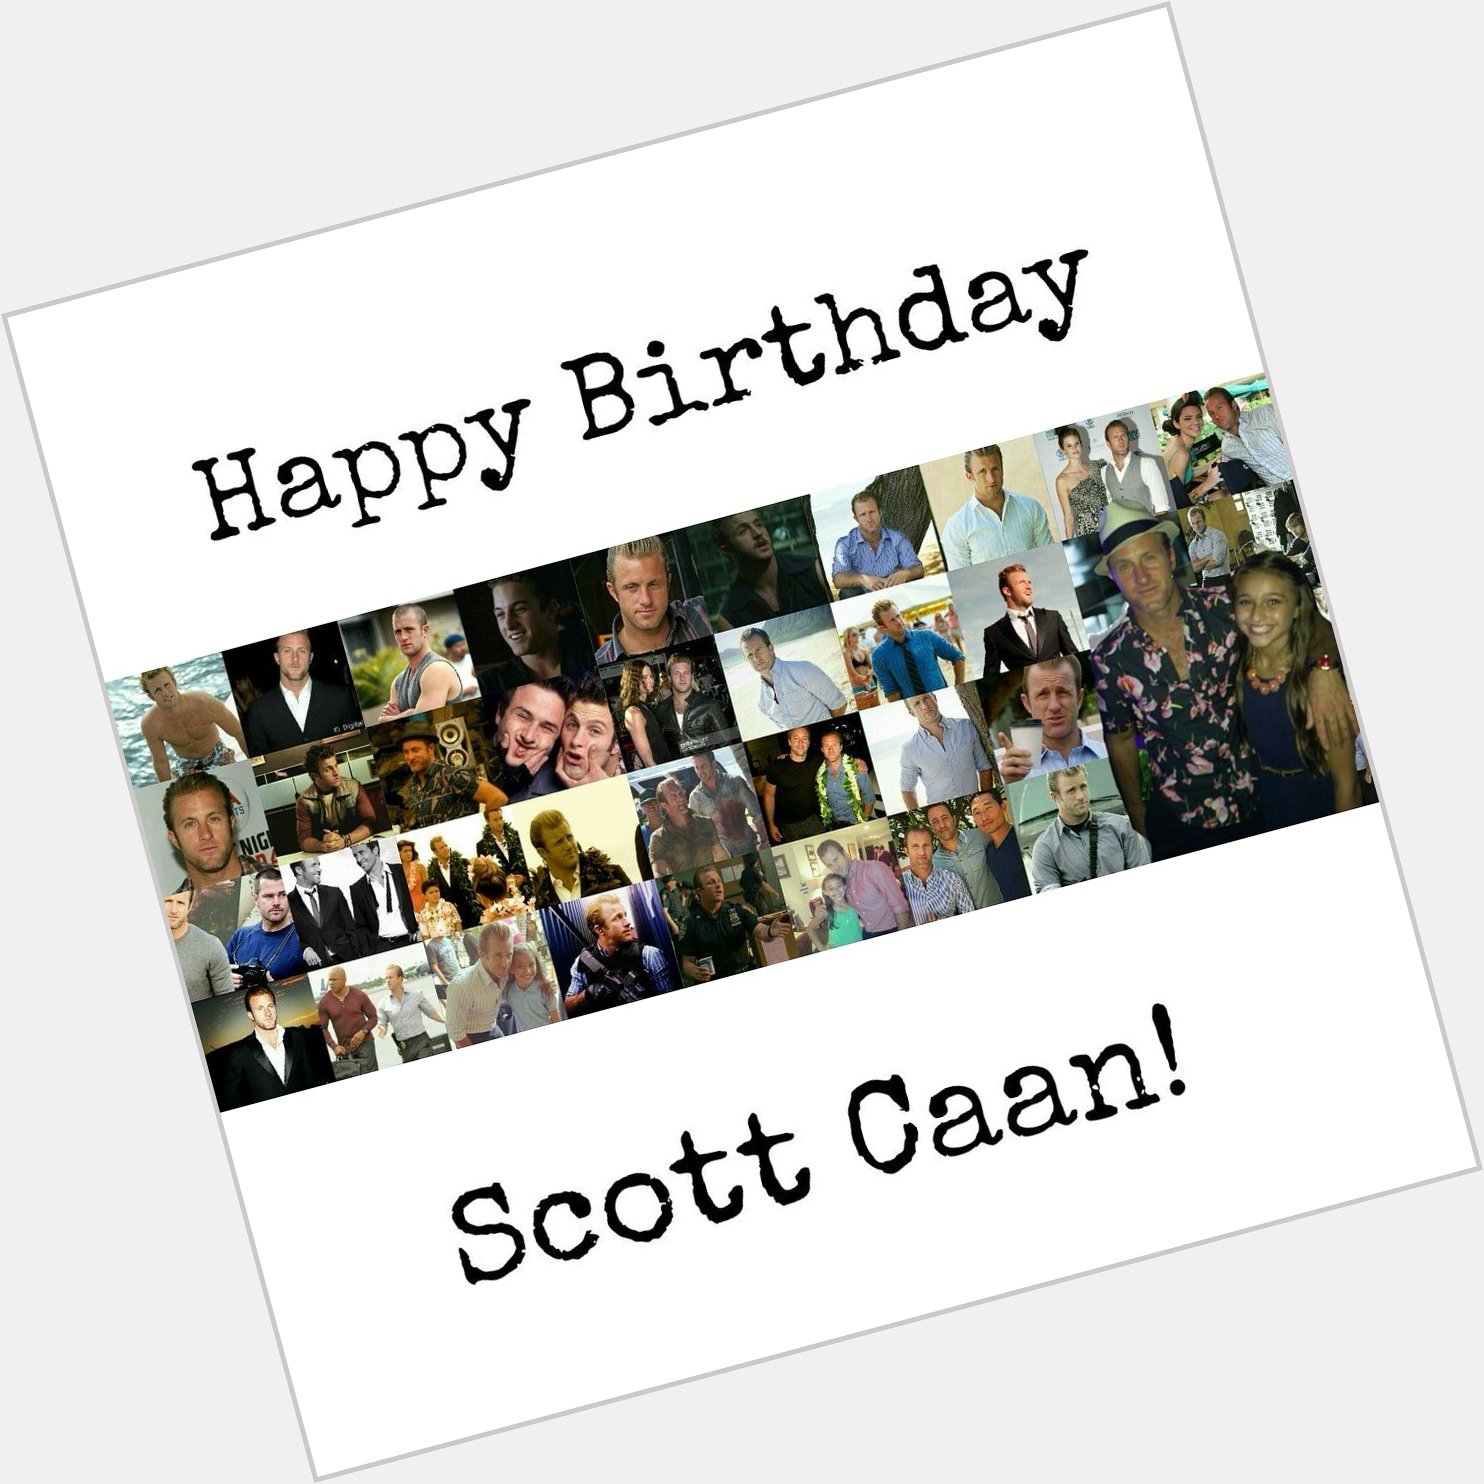 Happy Birthday Scott Caan! We from Bulgaria loves you!      